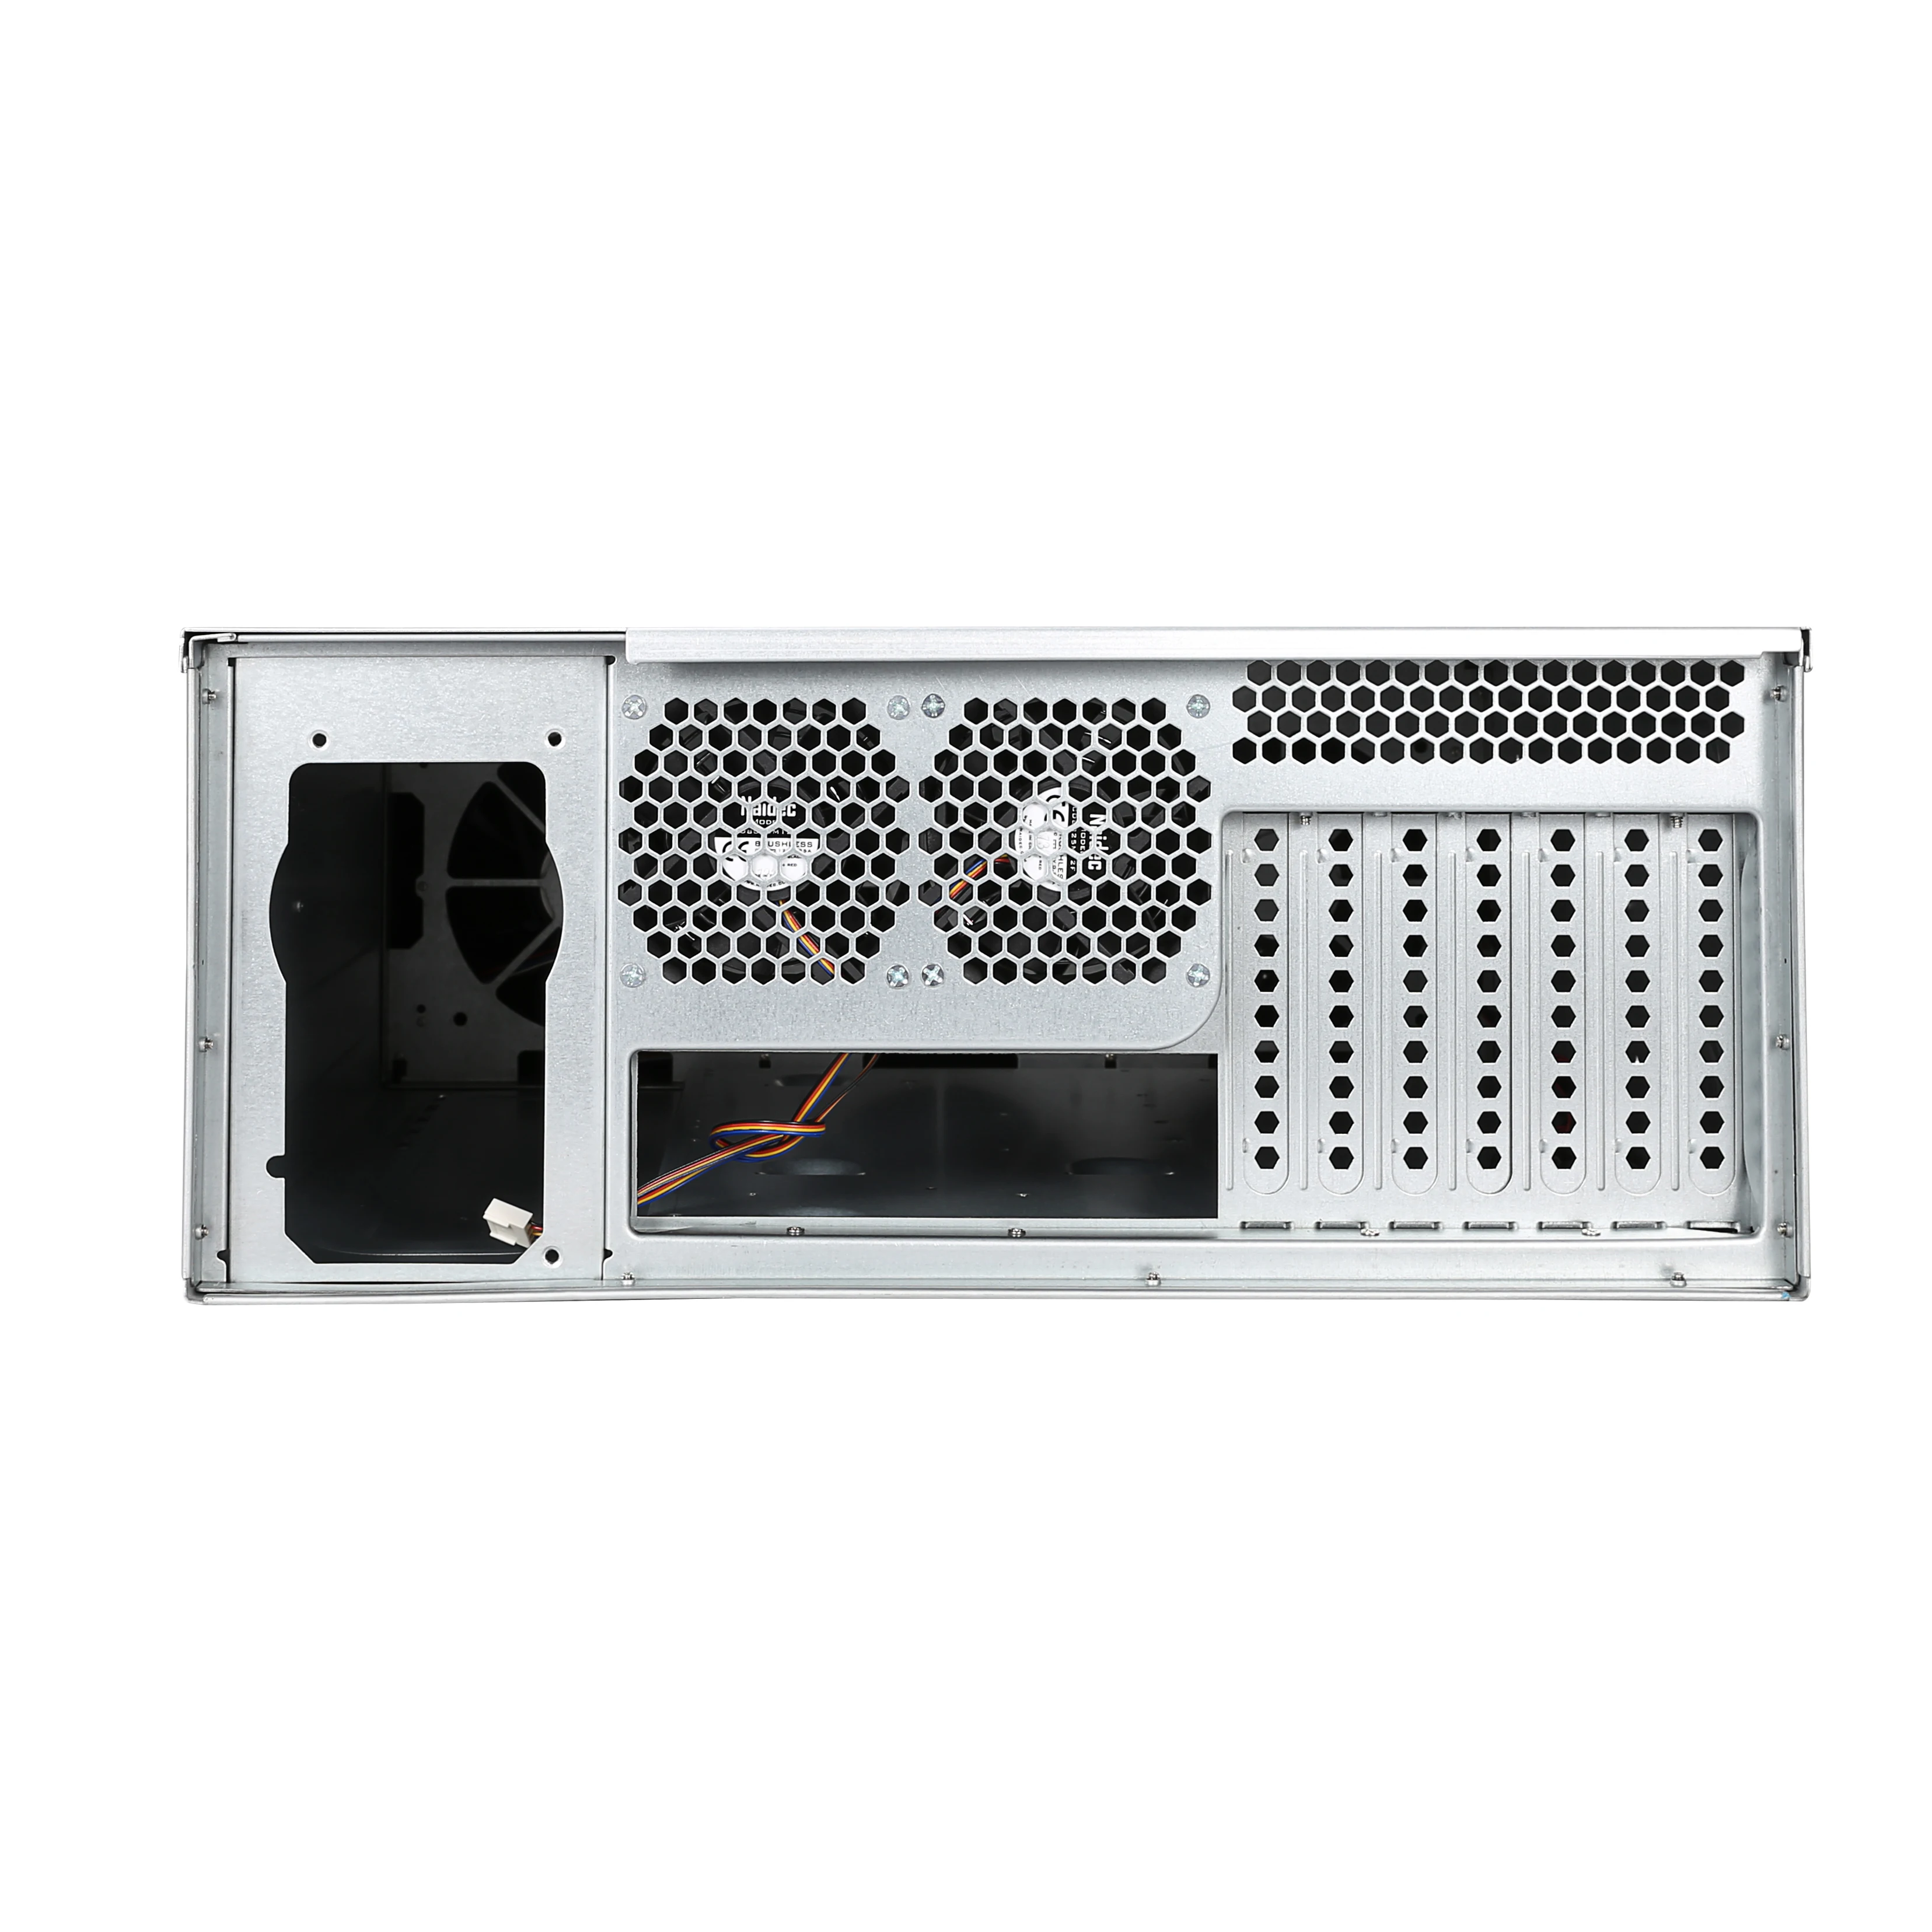 4u  24 Bays Storage Server Case 12G rackmount chassis